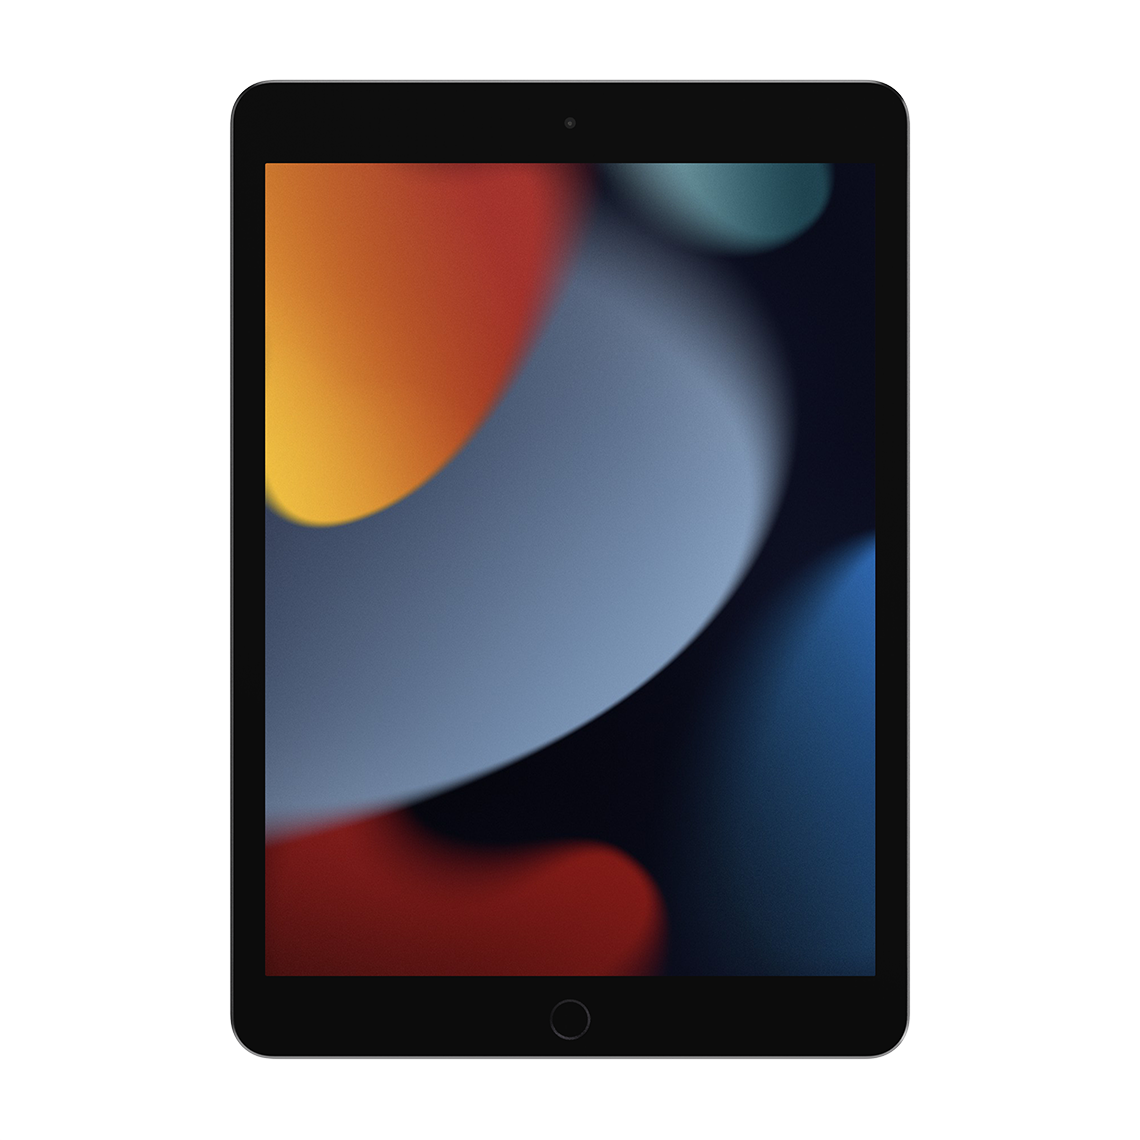 Apple iPad 10.2-inch 9th Generation - Space Gray - 256GB, Wi-Fi + Cellular, Grade B